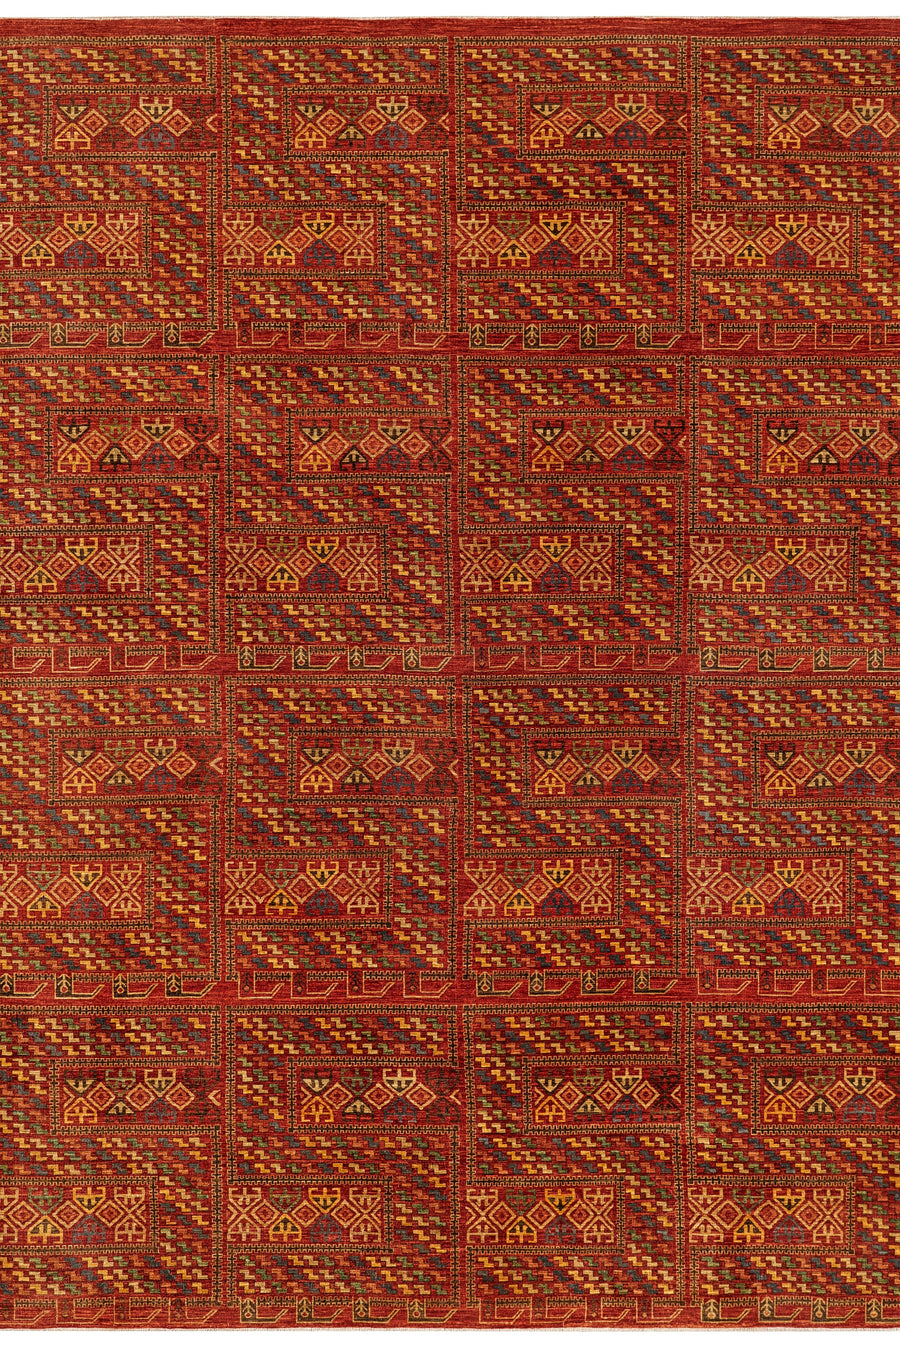 Senneh dragon rug in rust and orange tones